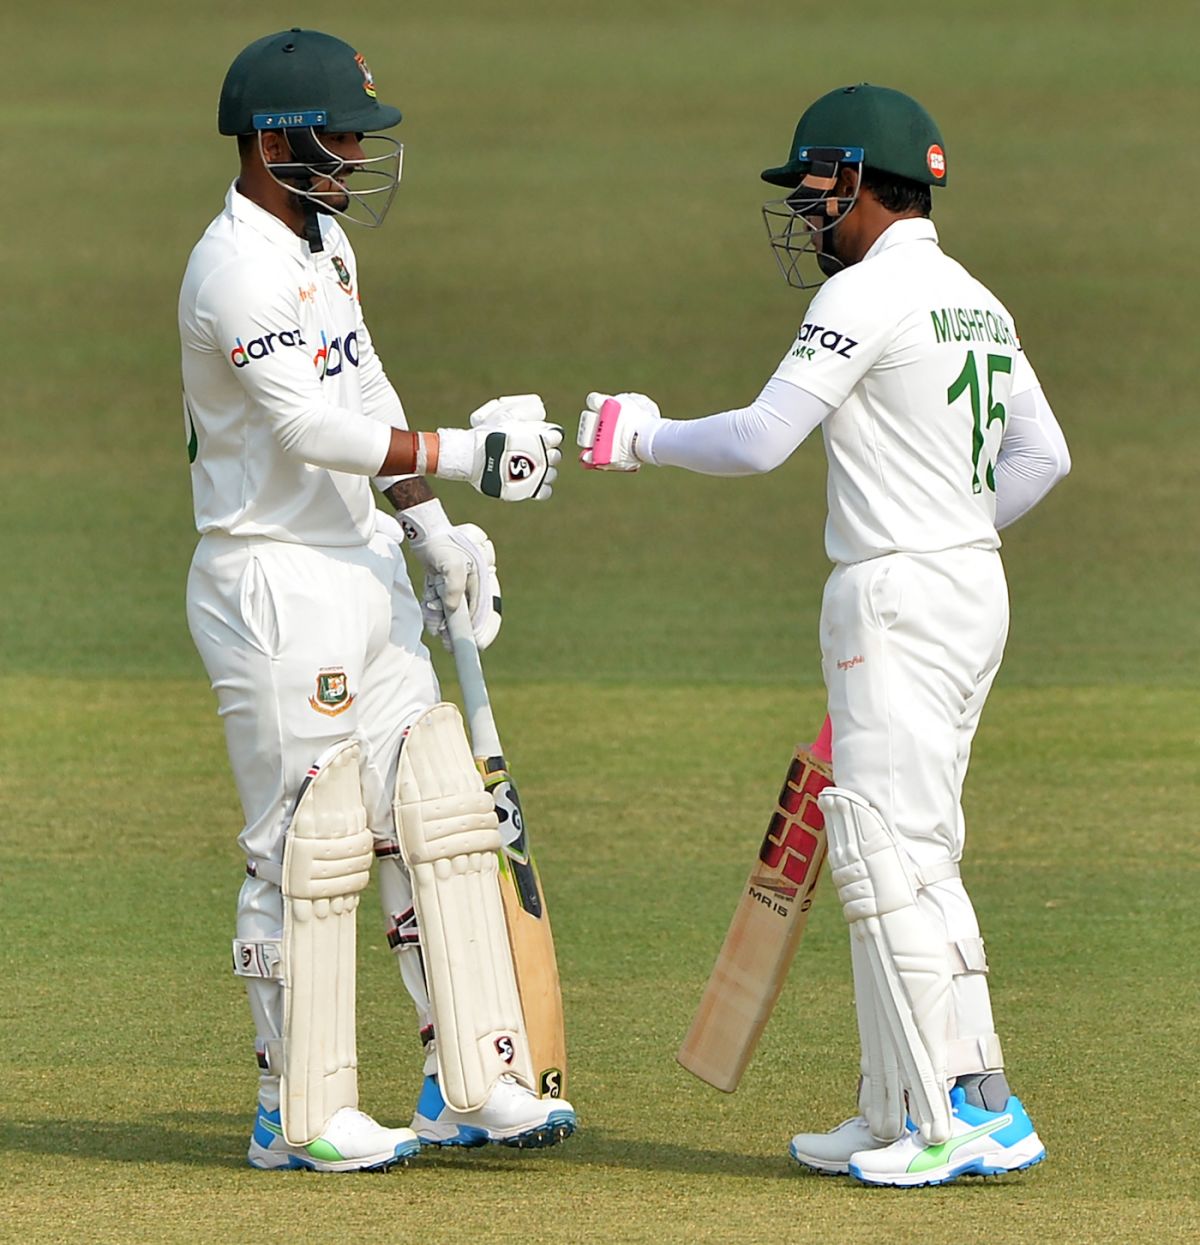 Liton Das and Mushfiqur Rahim bump fists during their stand, Bangladesh vs Pakistan, 1st Test, Chattogram, 1st day, November 26, 2021